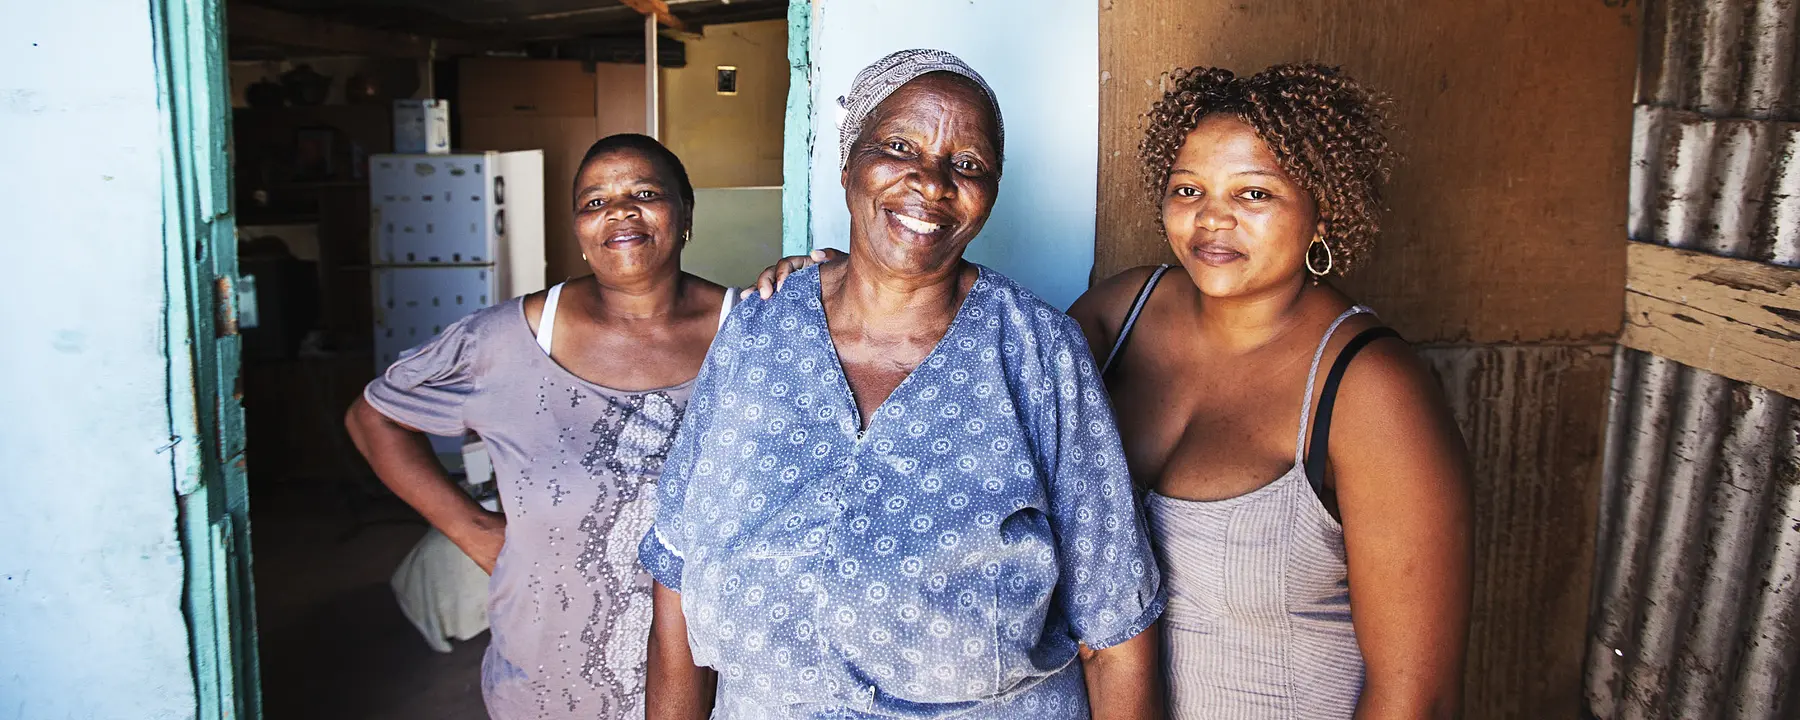 Xhosa women in South Africa